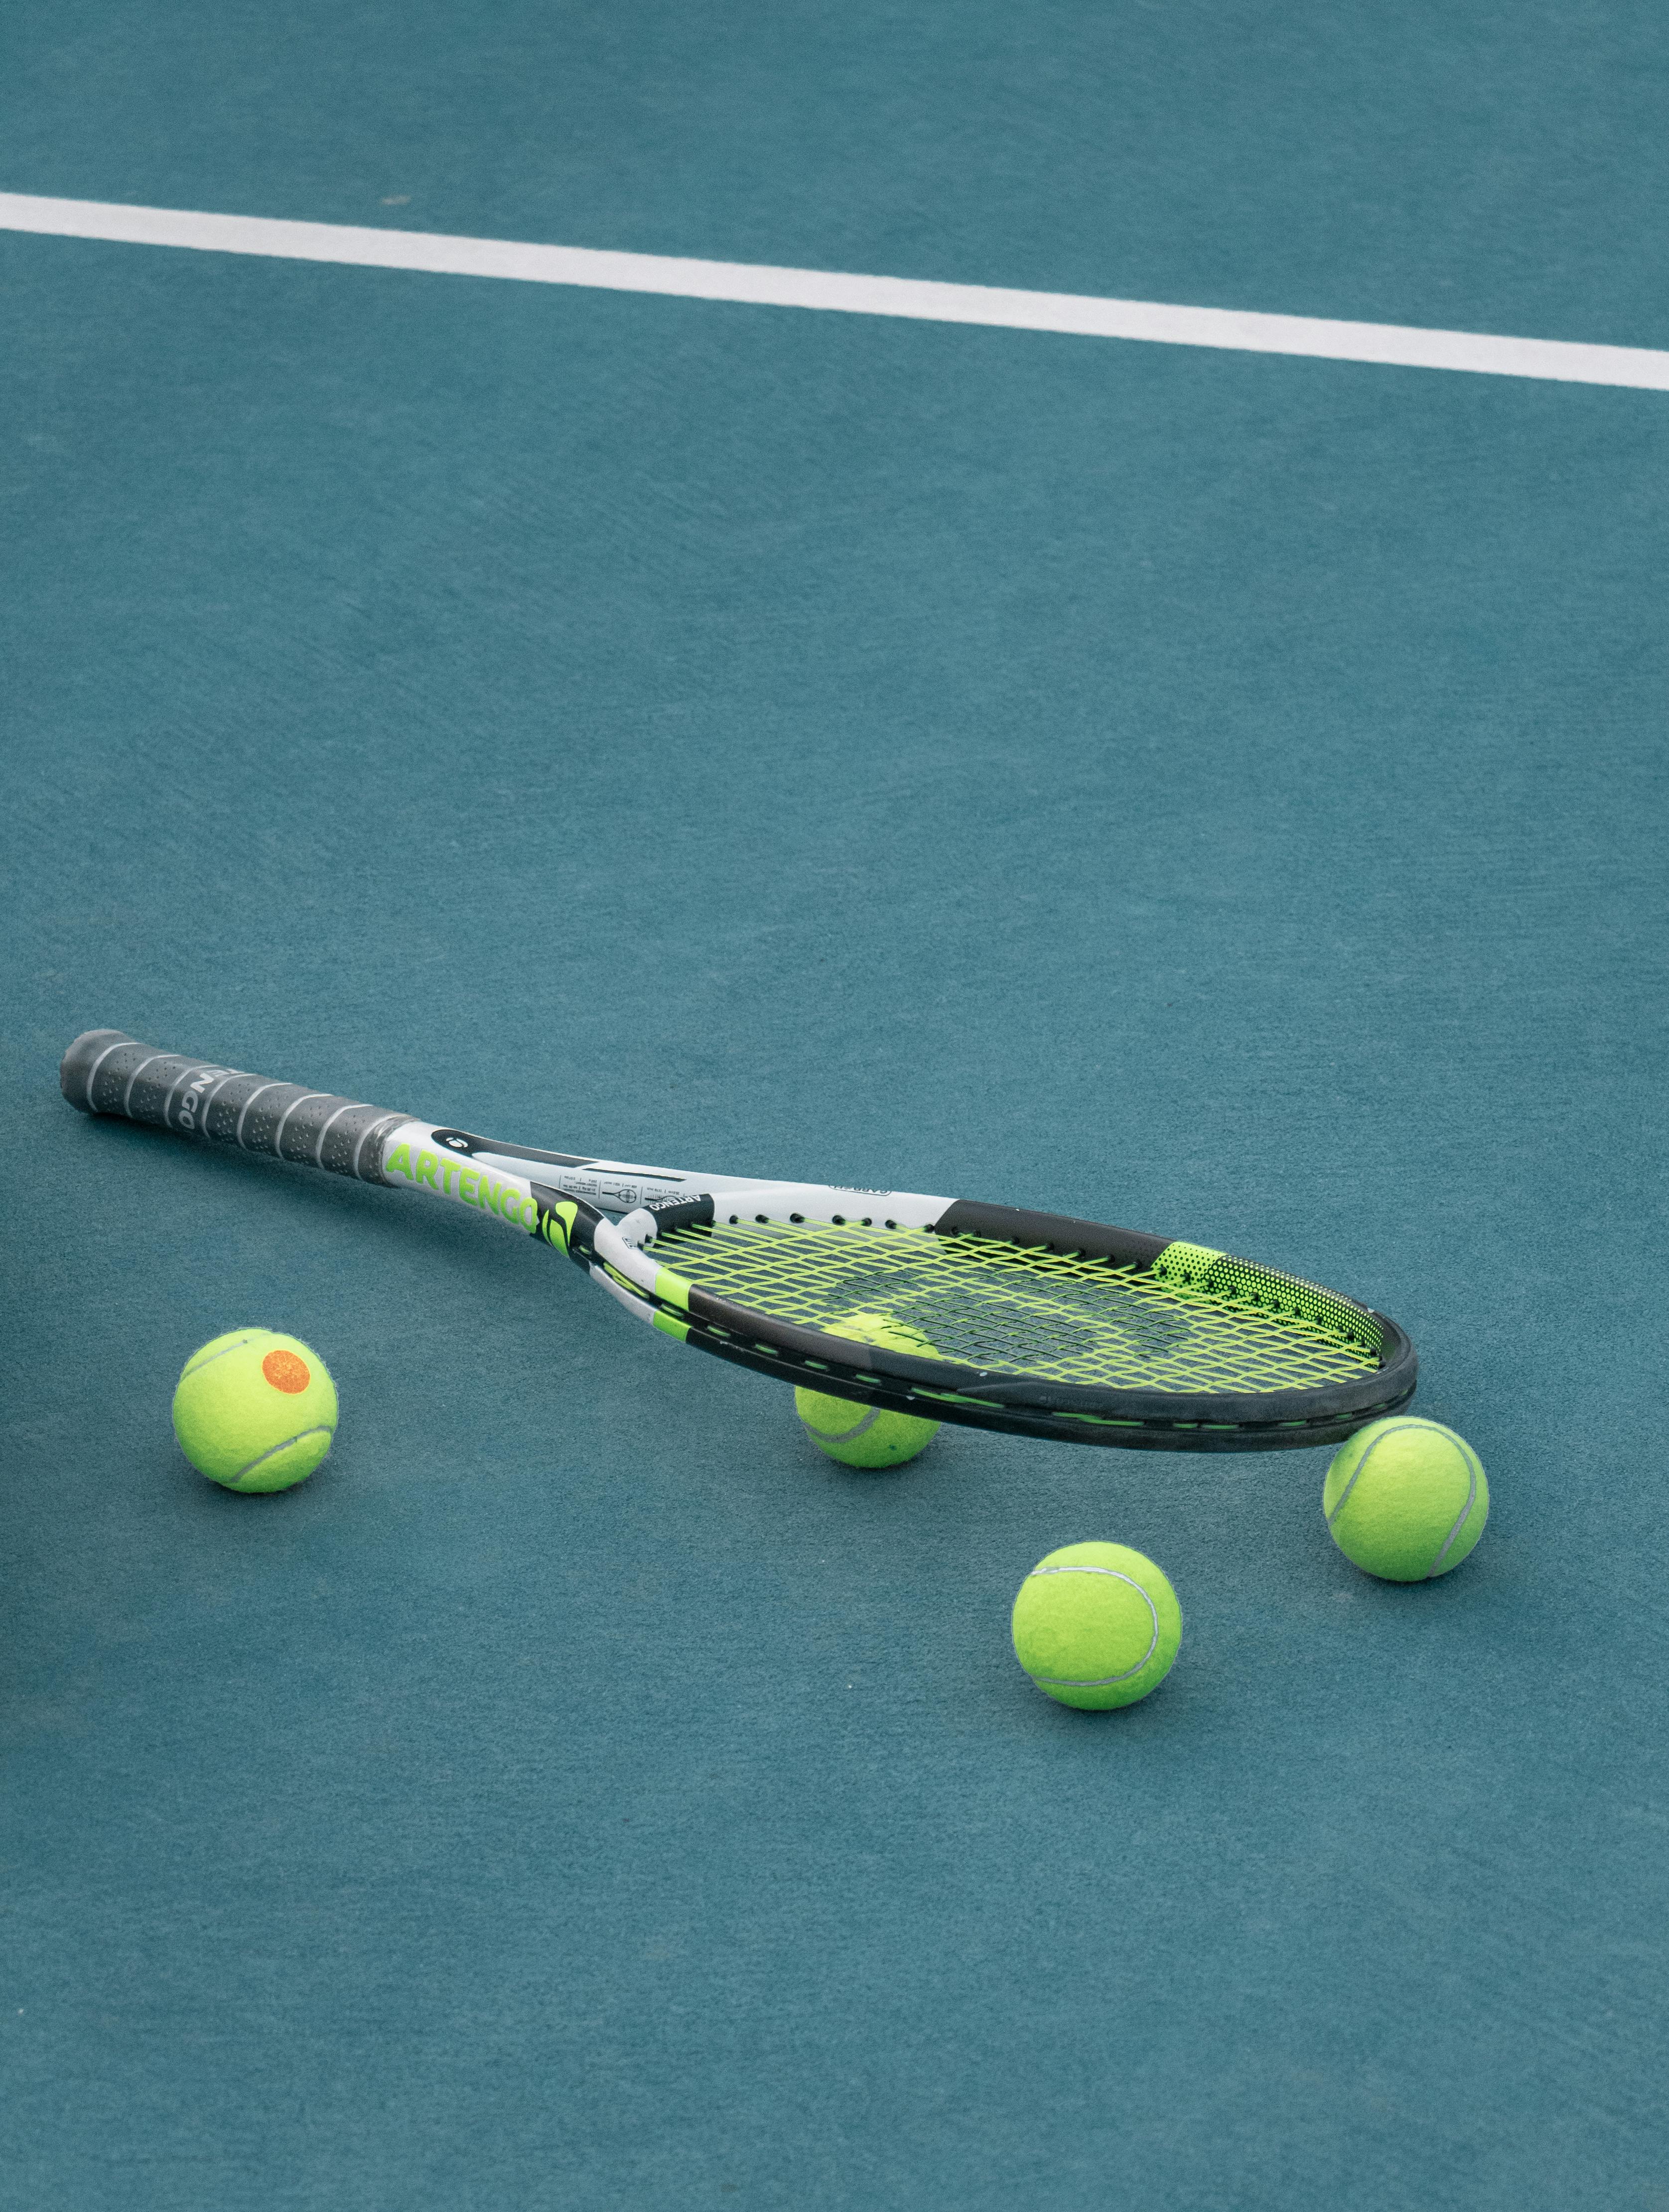 Soft tennis vs tennis